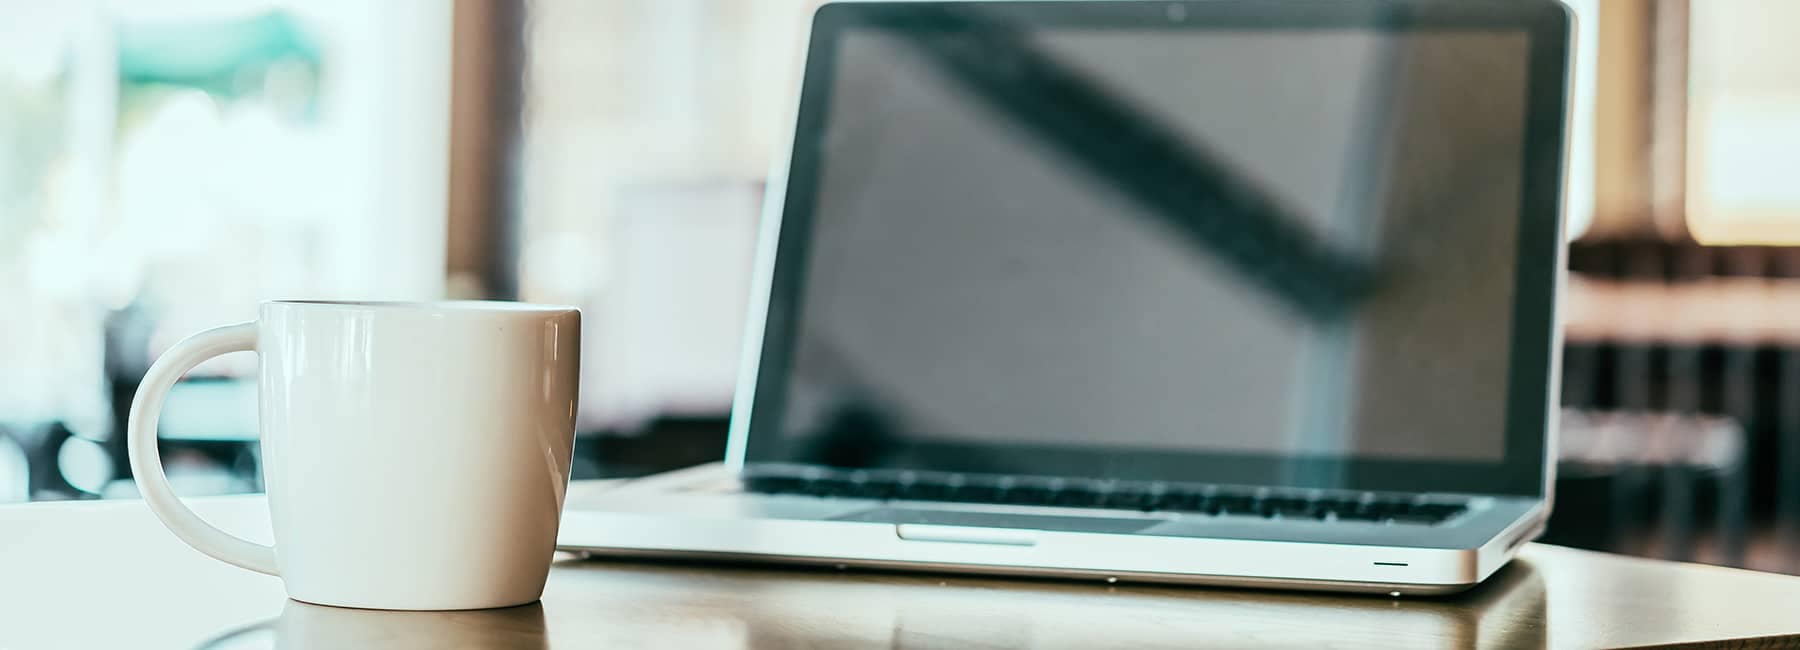 Laptop with coffee mug